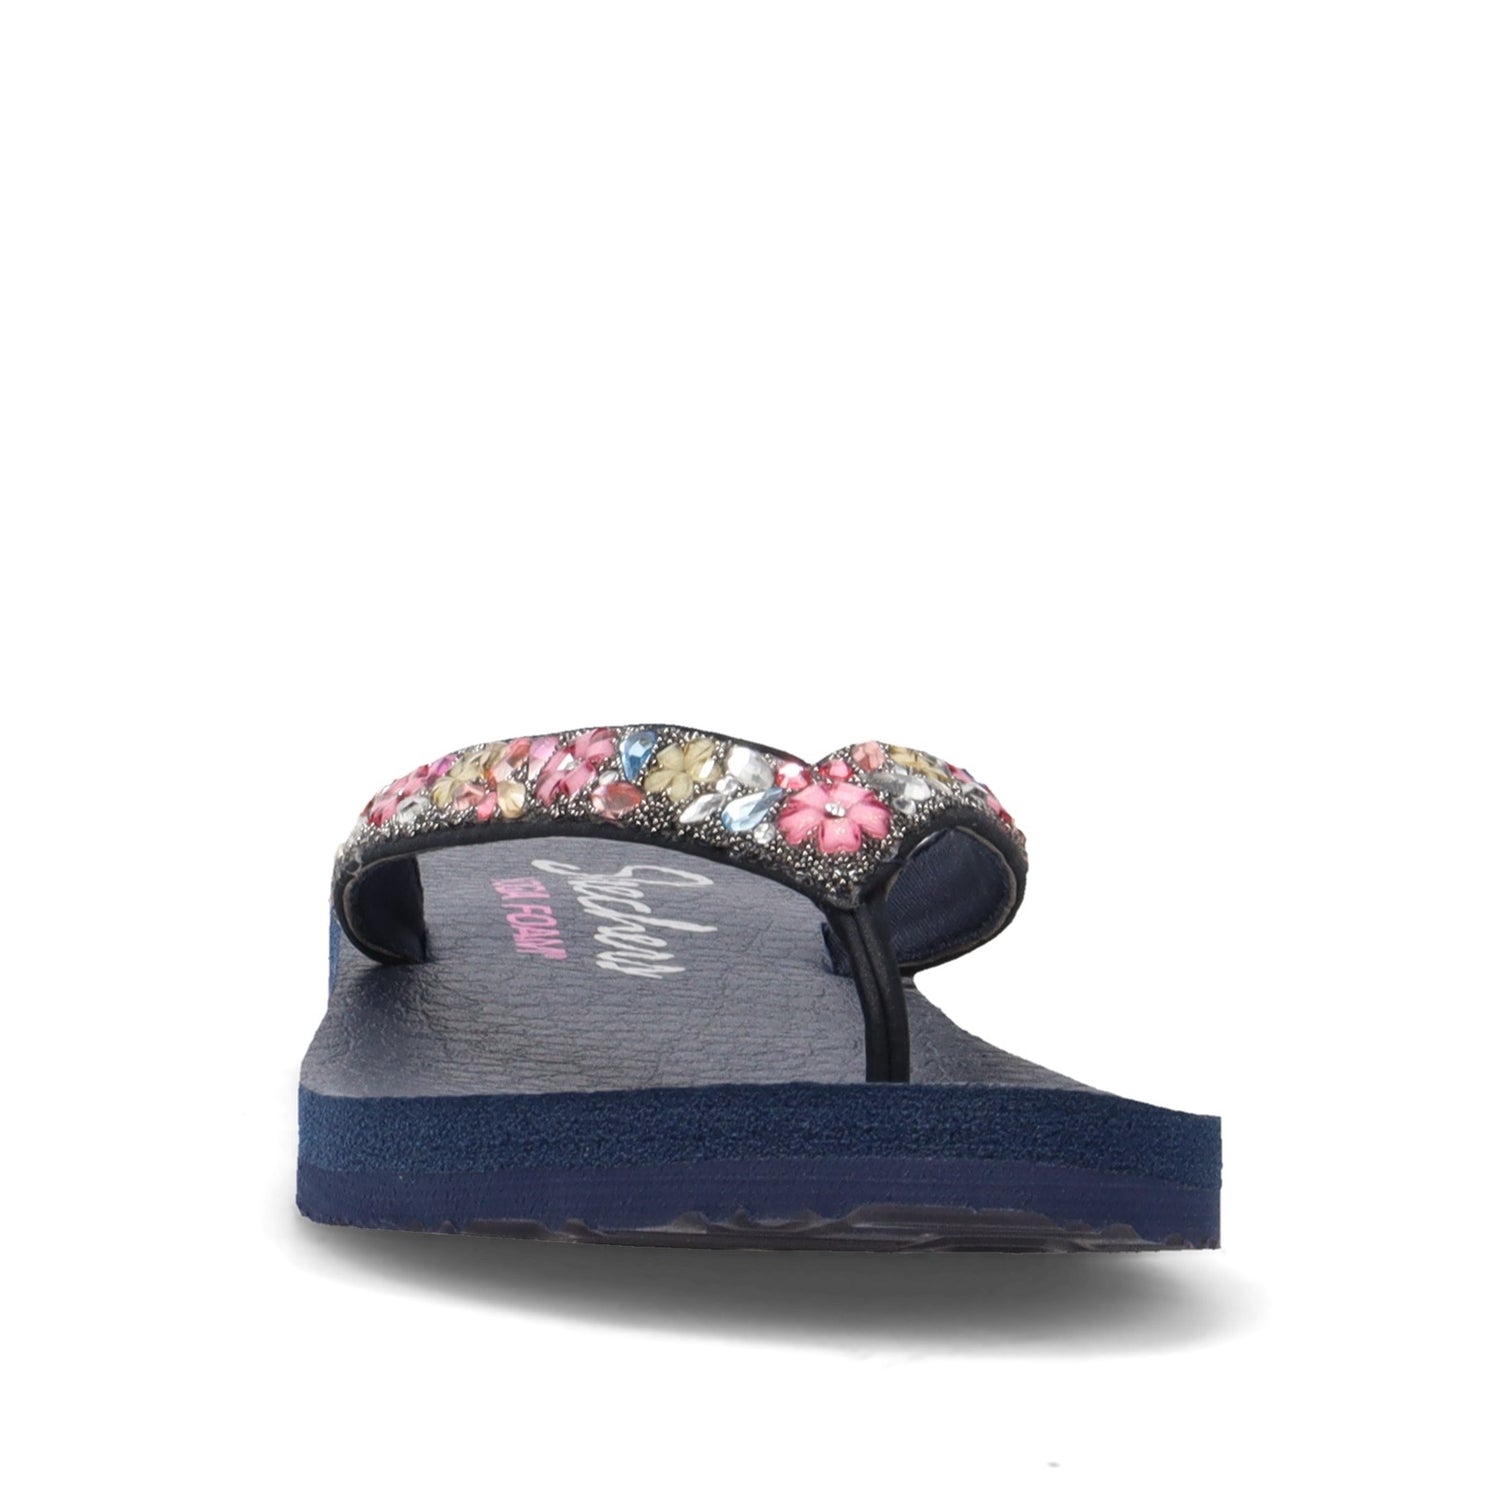 Peltz Shoes  Women's Skechers Meditation - Daisy Garden Sandal Navy Multi 119153-NVMT